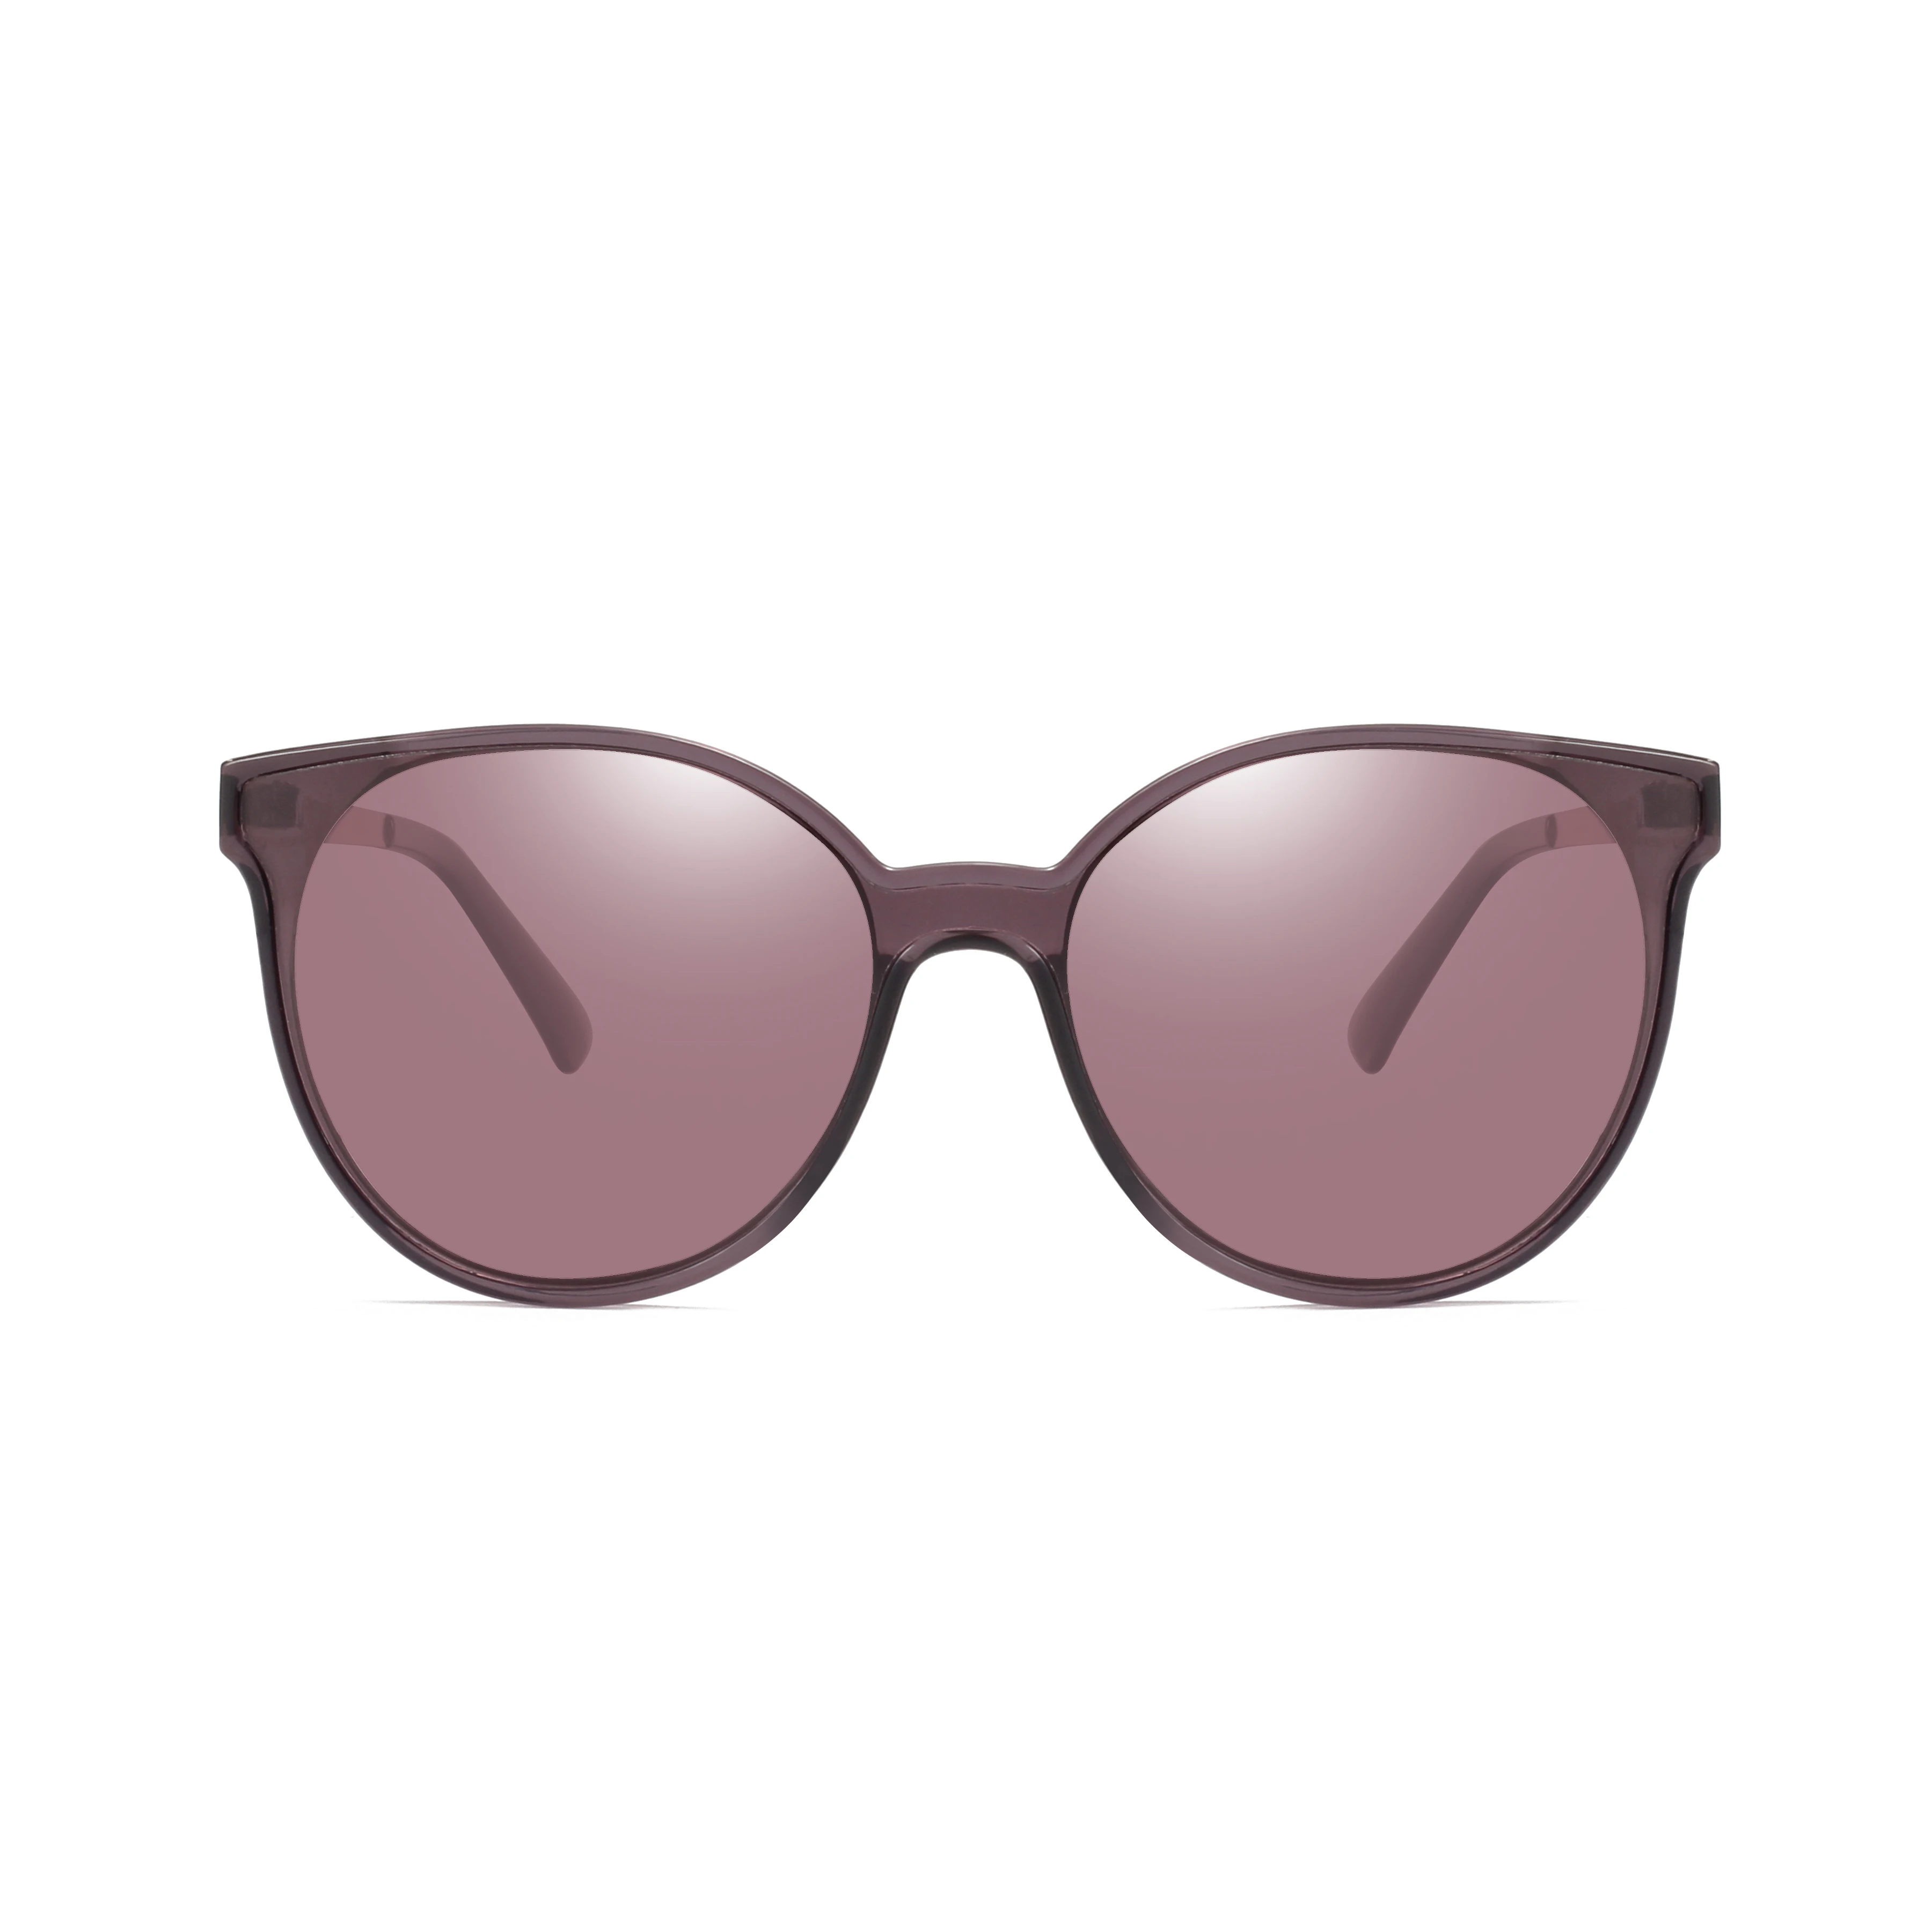 EUGENIA New Arrival Round Eyeglasses coating Retro Men women Brand Designer Mirrored Sunglasses